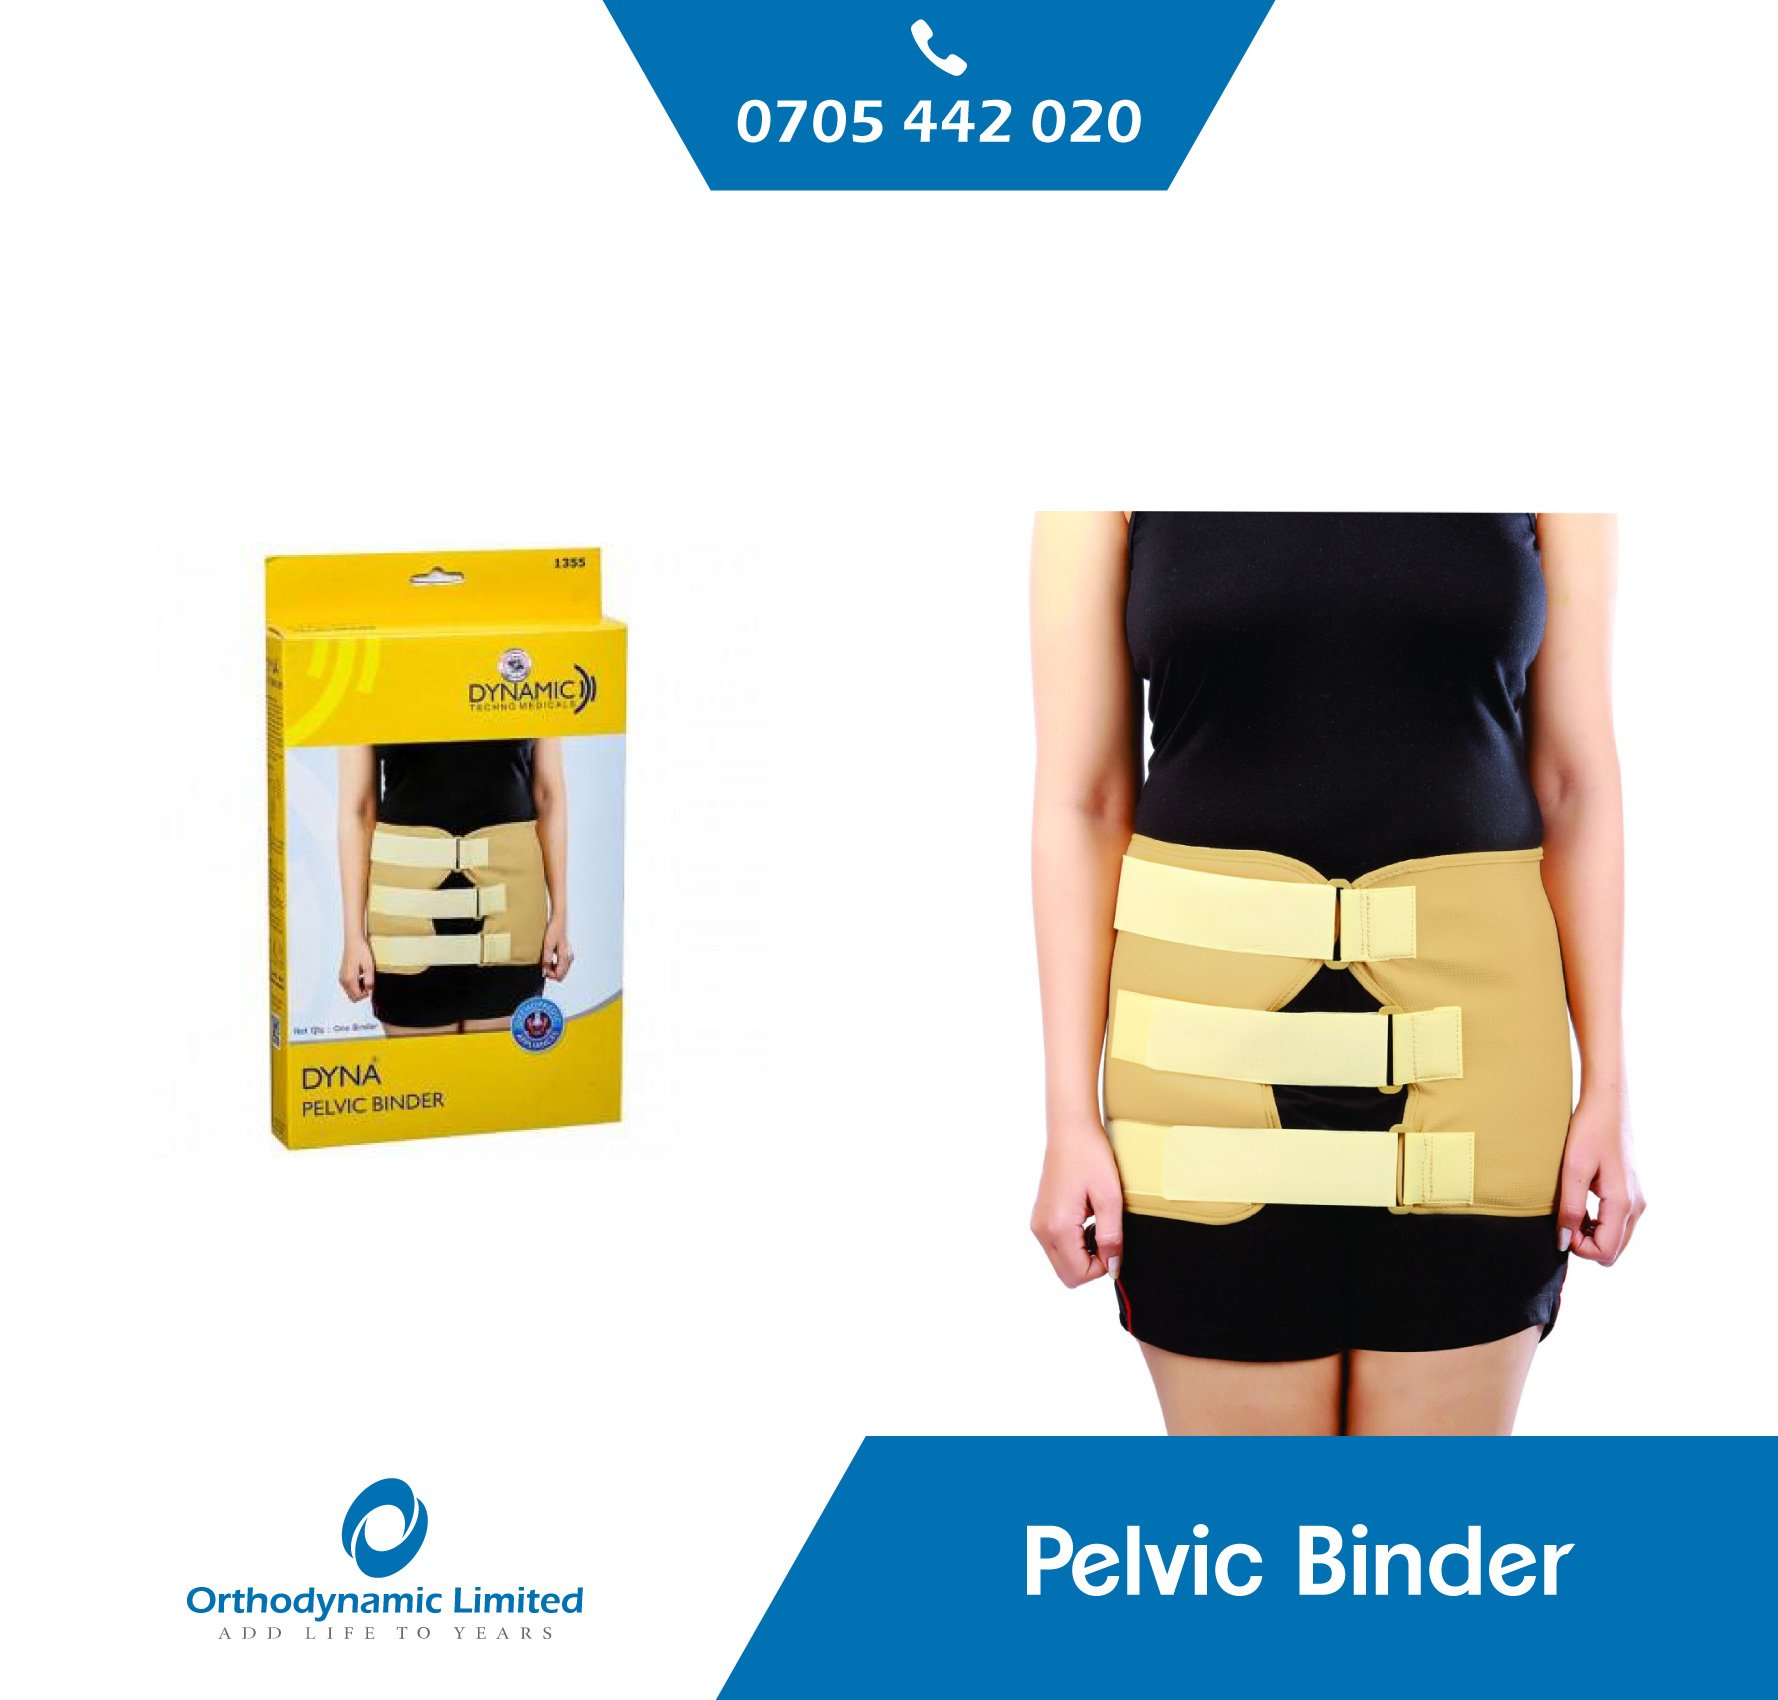 Pelvic binder - Available - Orthodynamic Limited - Nairobi - Kenya